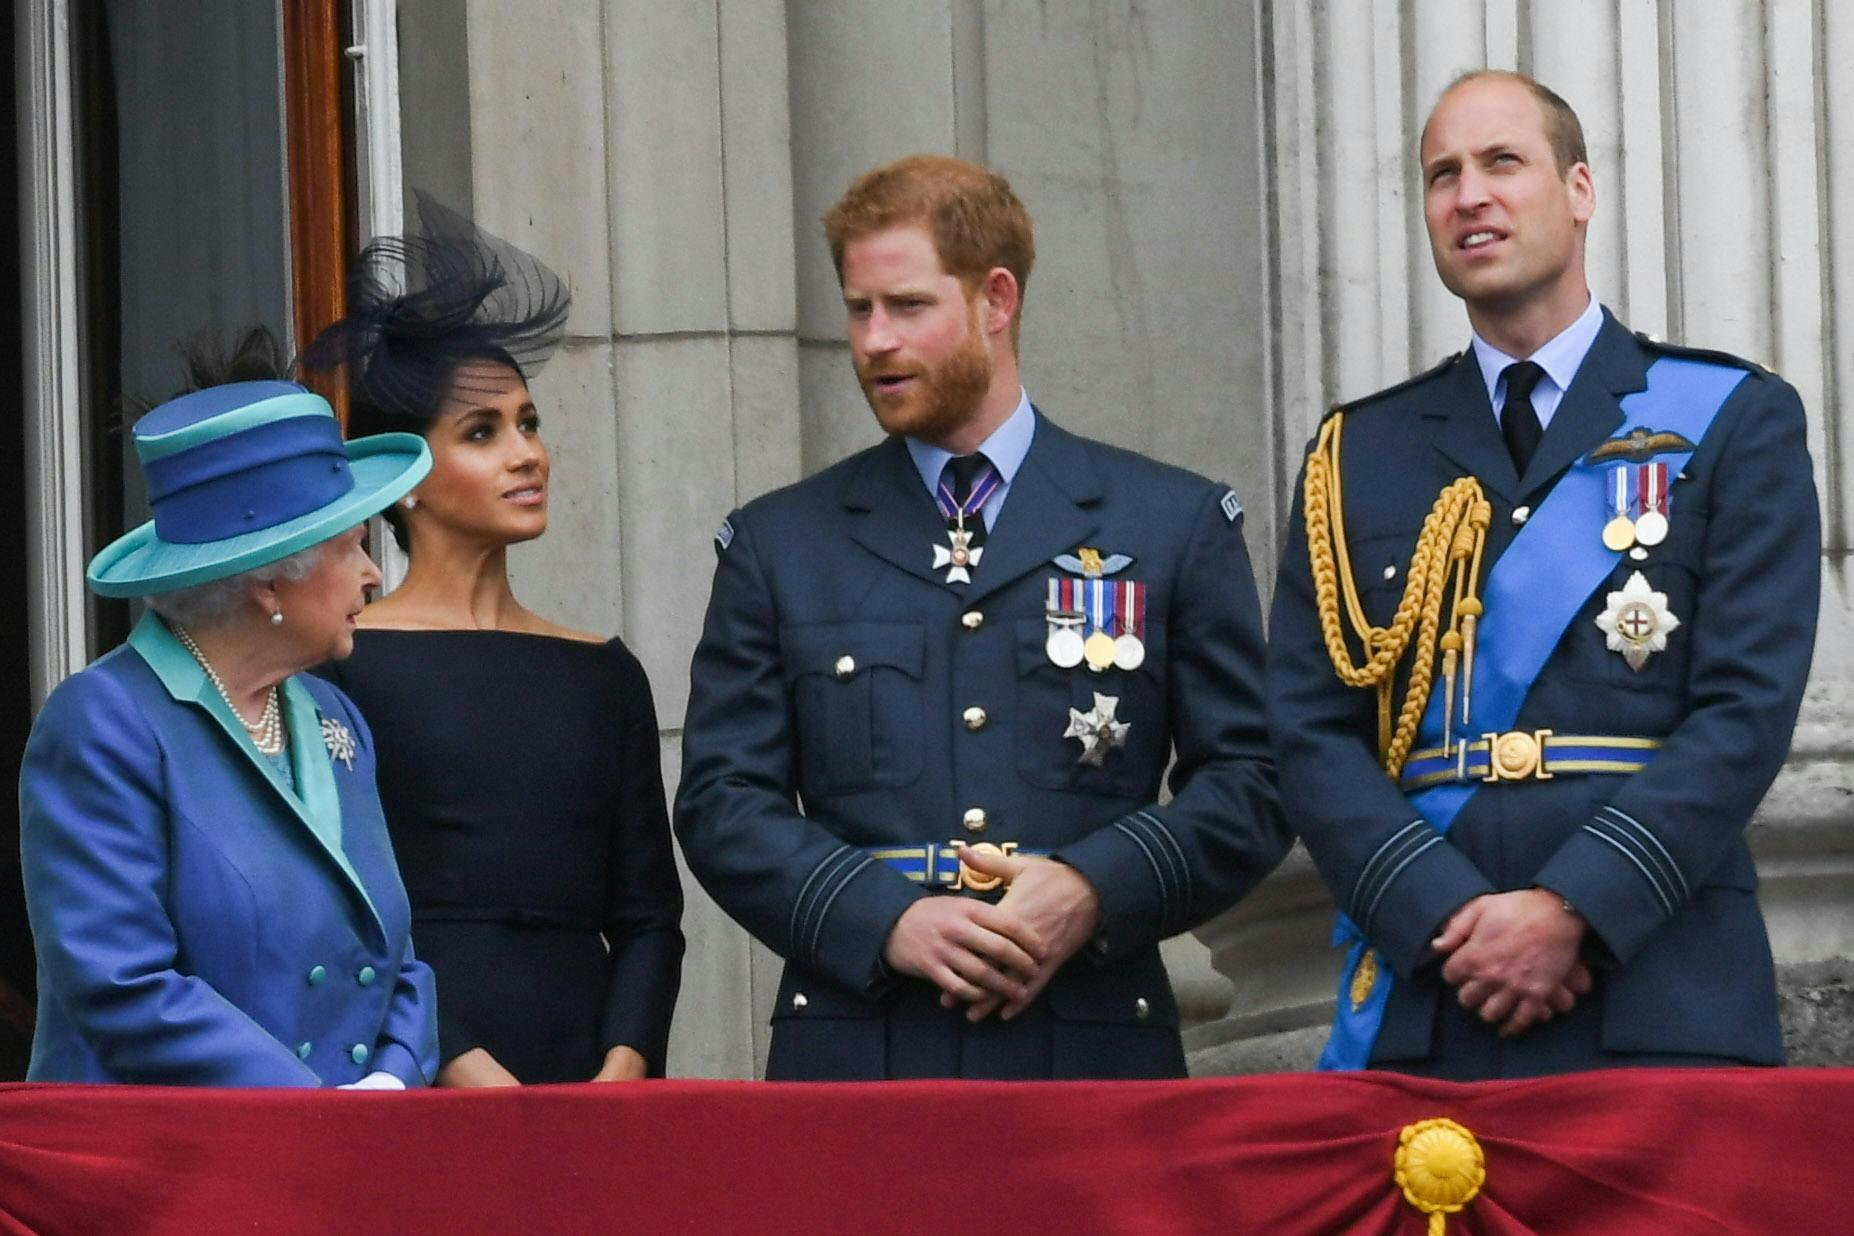 medals megan markle dior pale blue london england person hat clothing tie accessories suit coat military military uniform officer